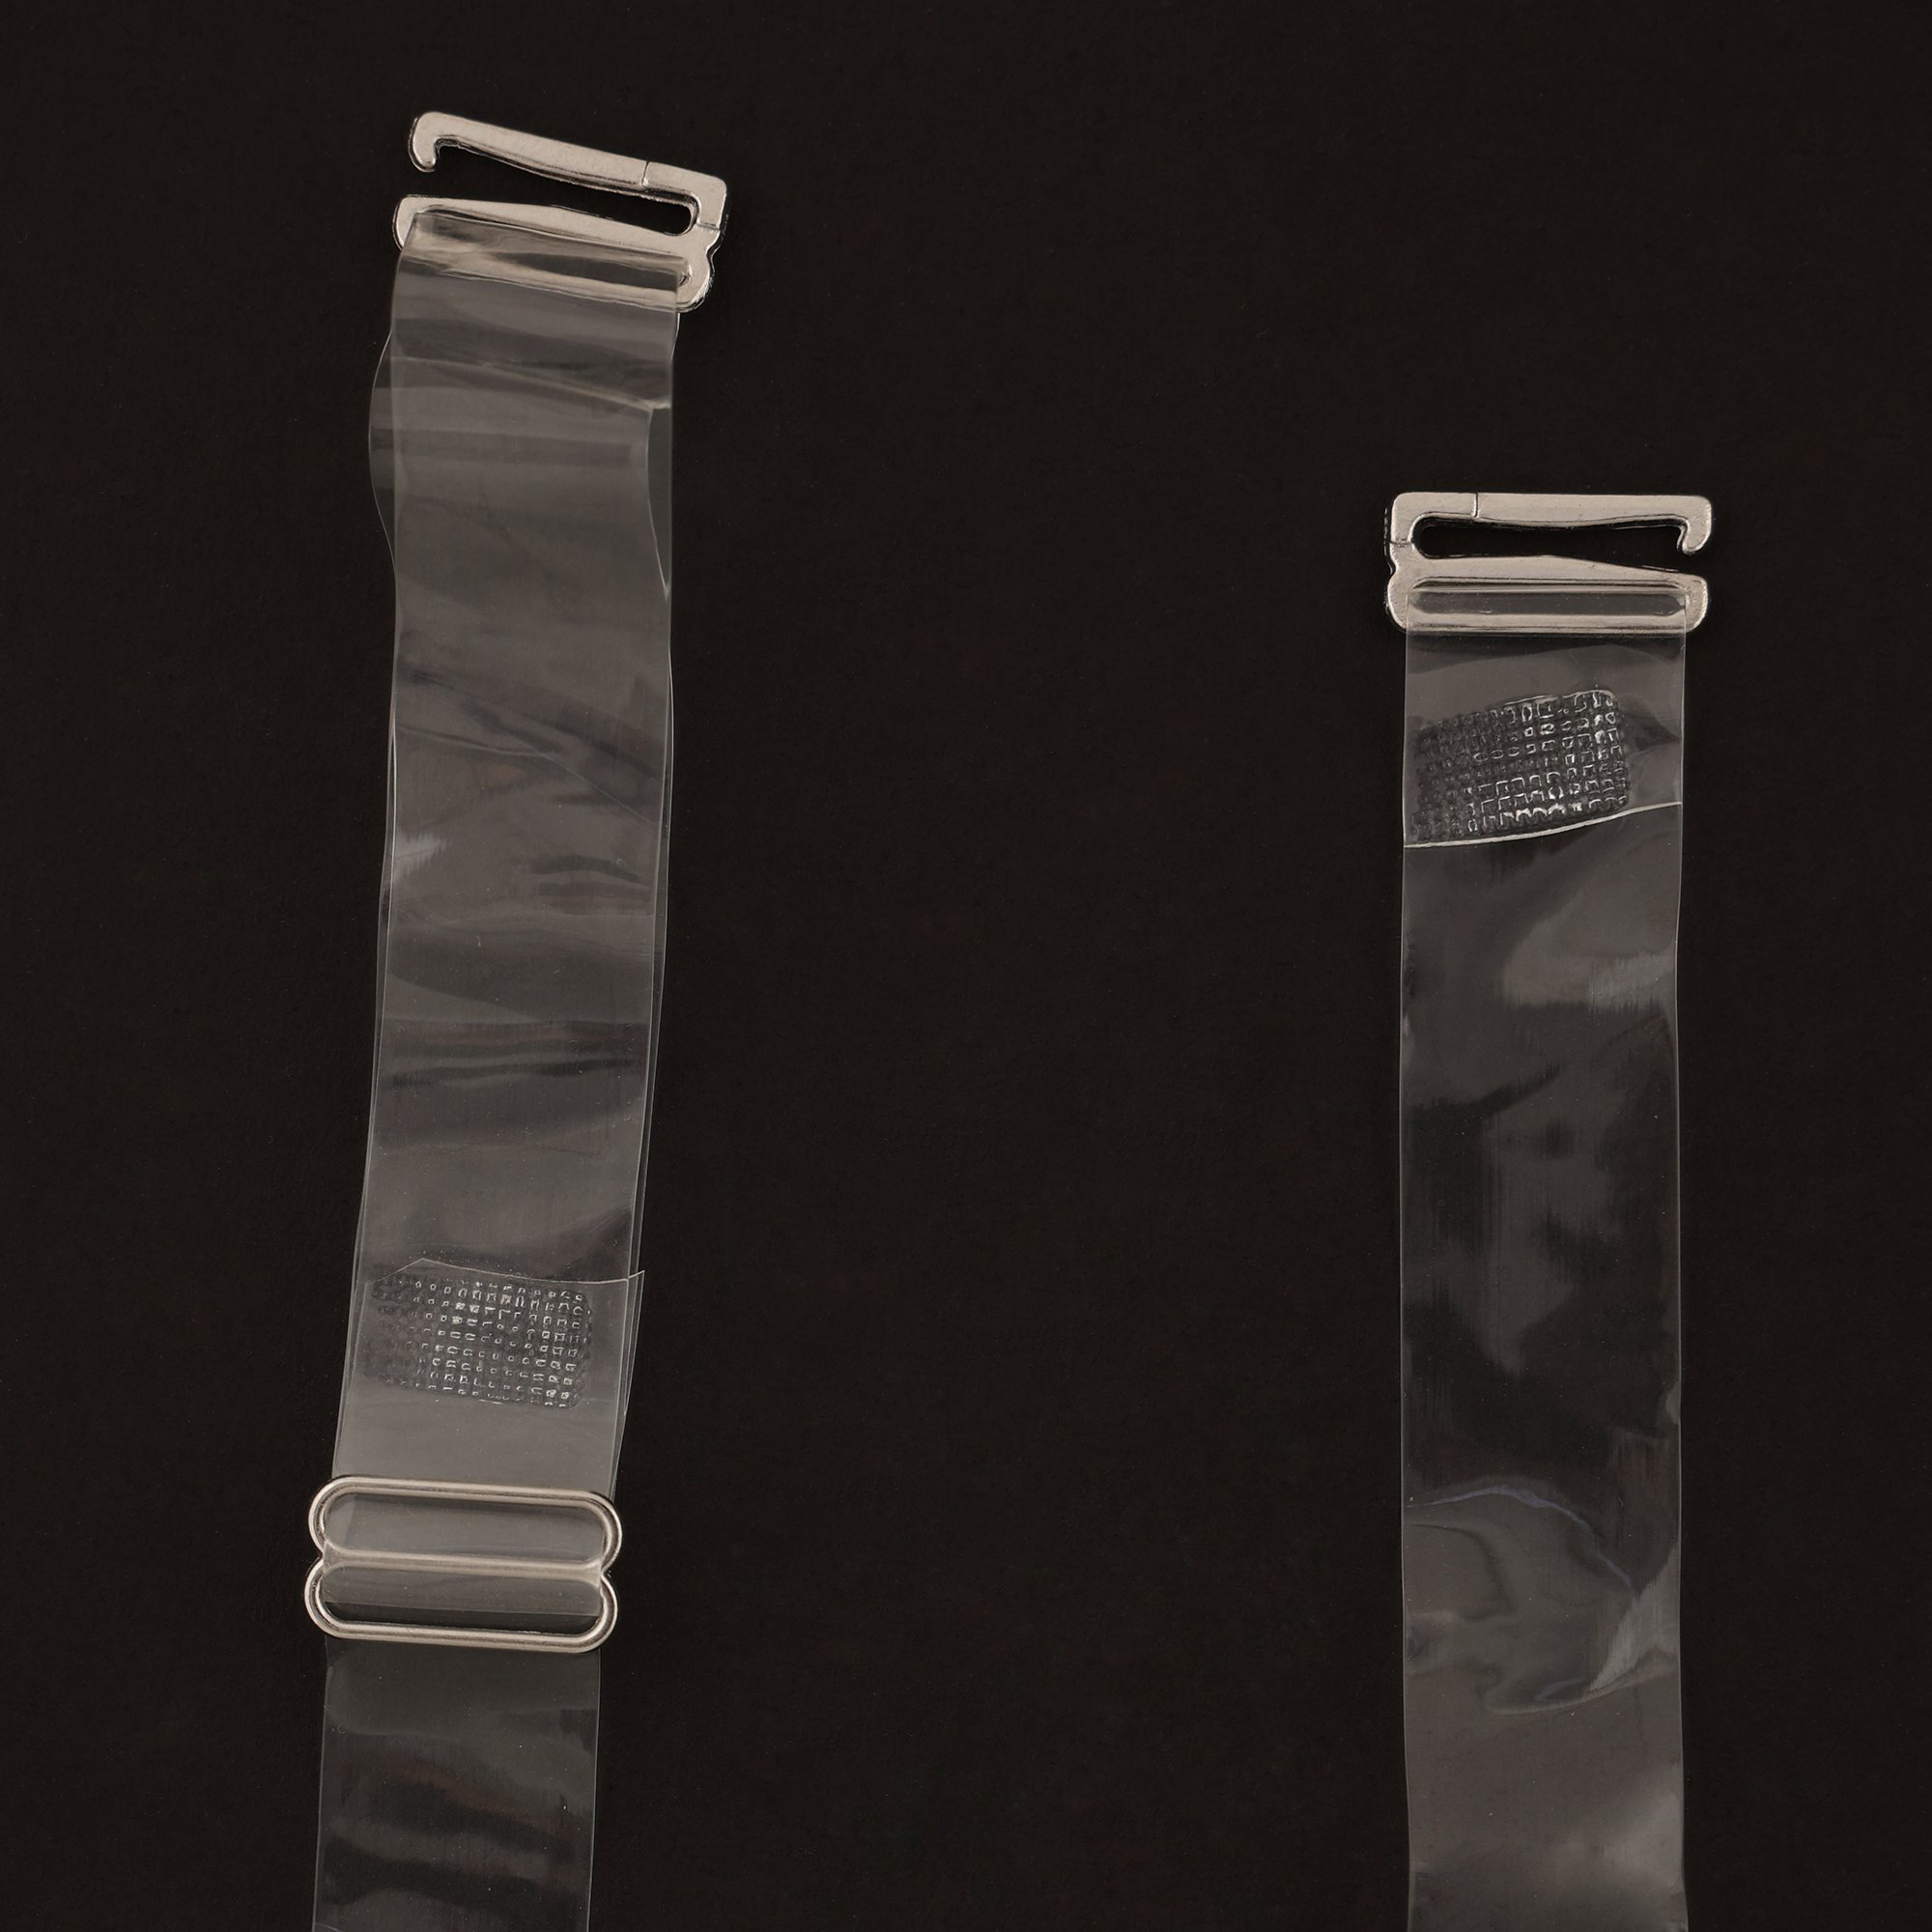 18mm Fashion Adjustable Transparent Silicone Bra Straps 1-Pair